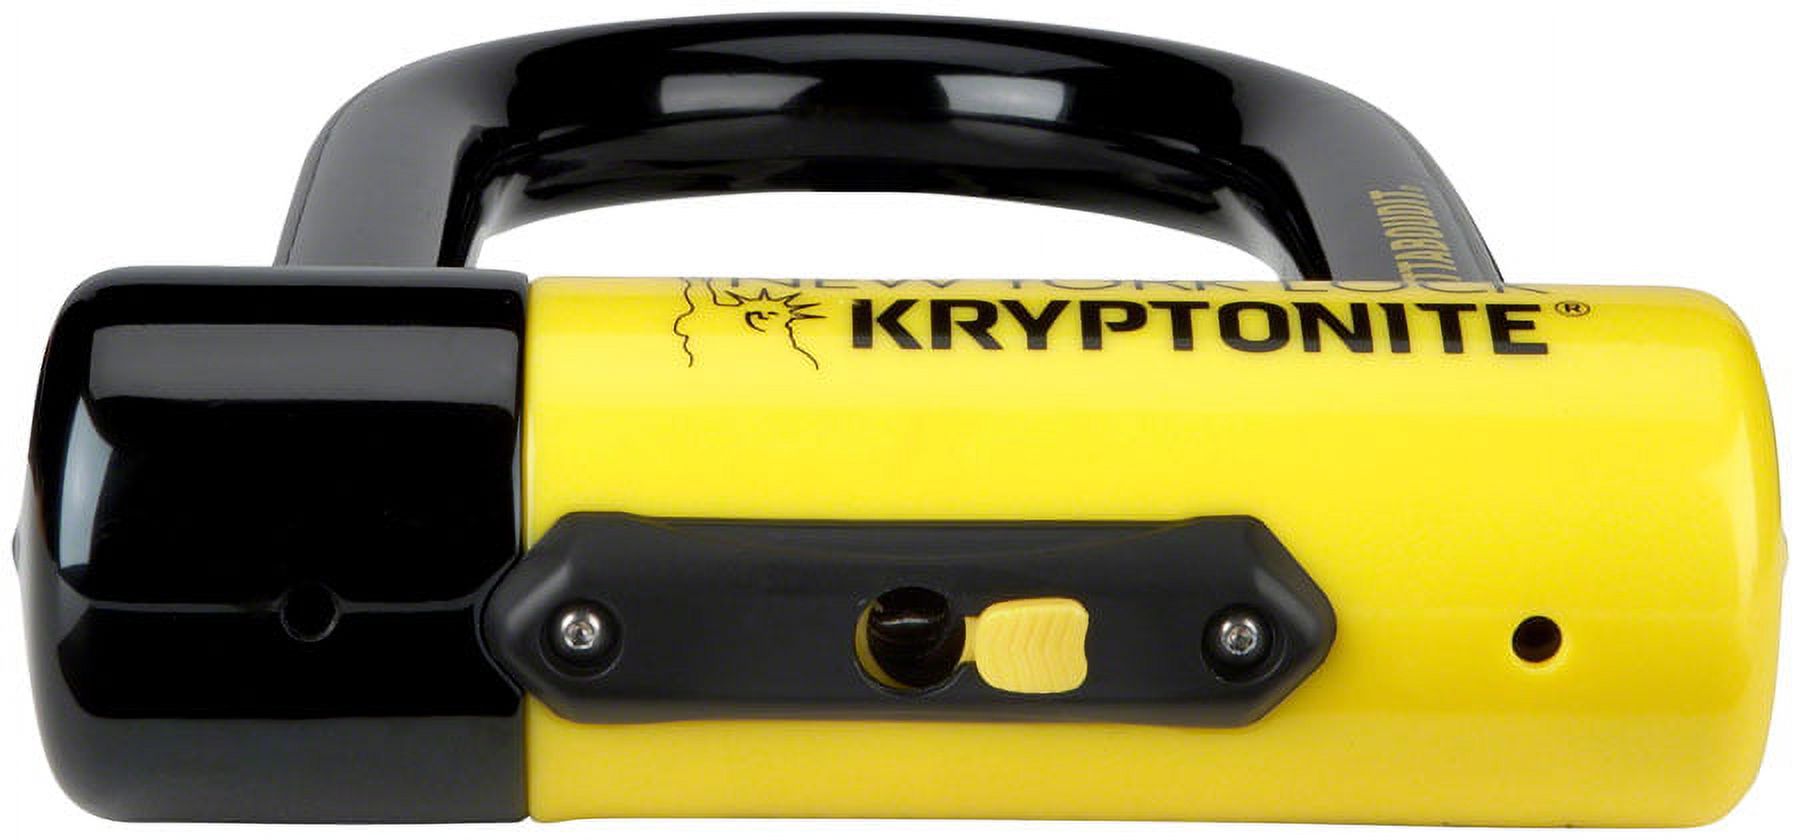 Kryptonite New-U New York Fahgettaboudit Mini U-Lock Bicycle Lock - image 3 of 8